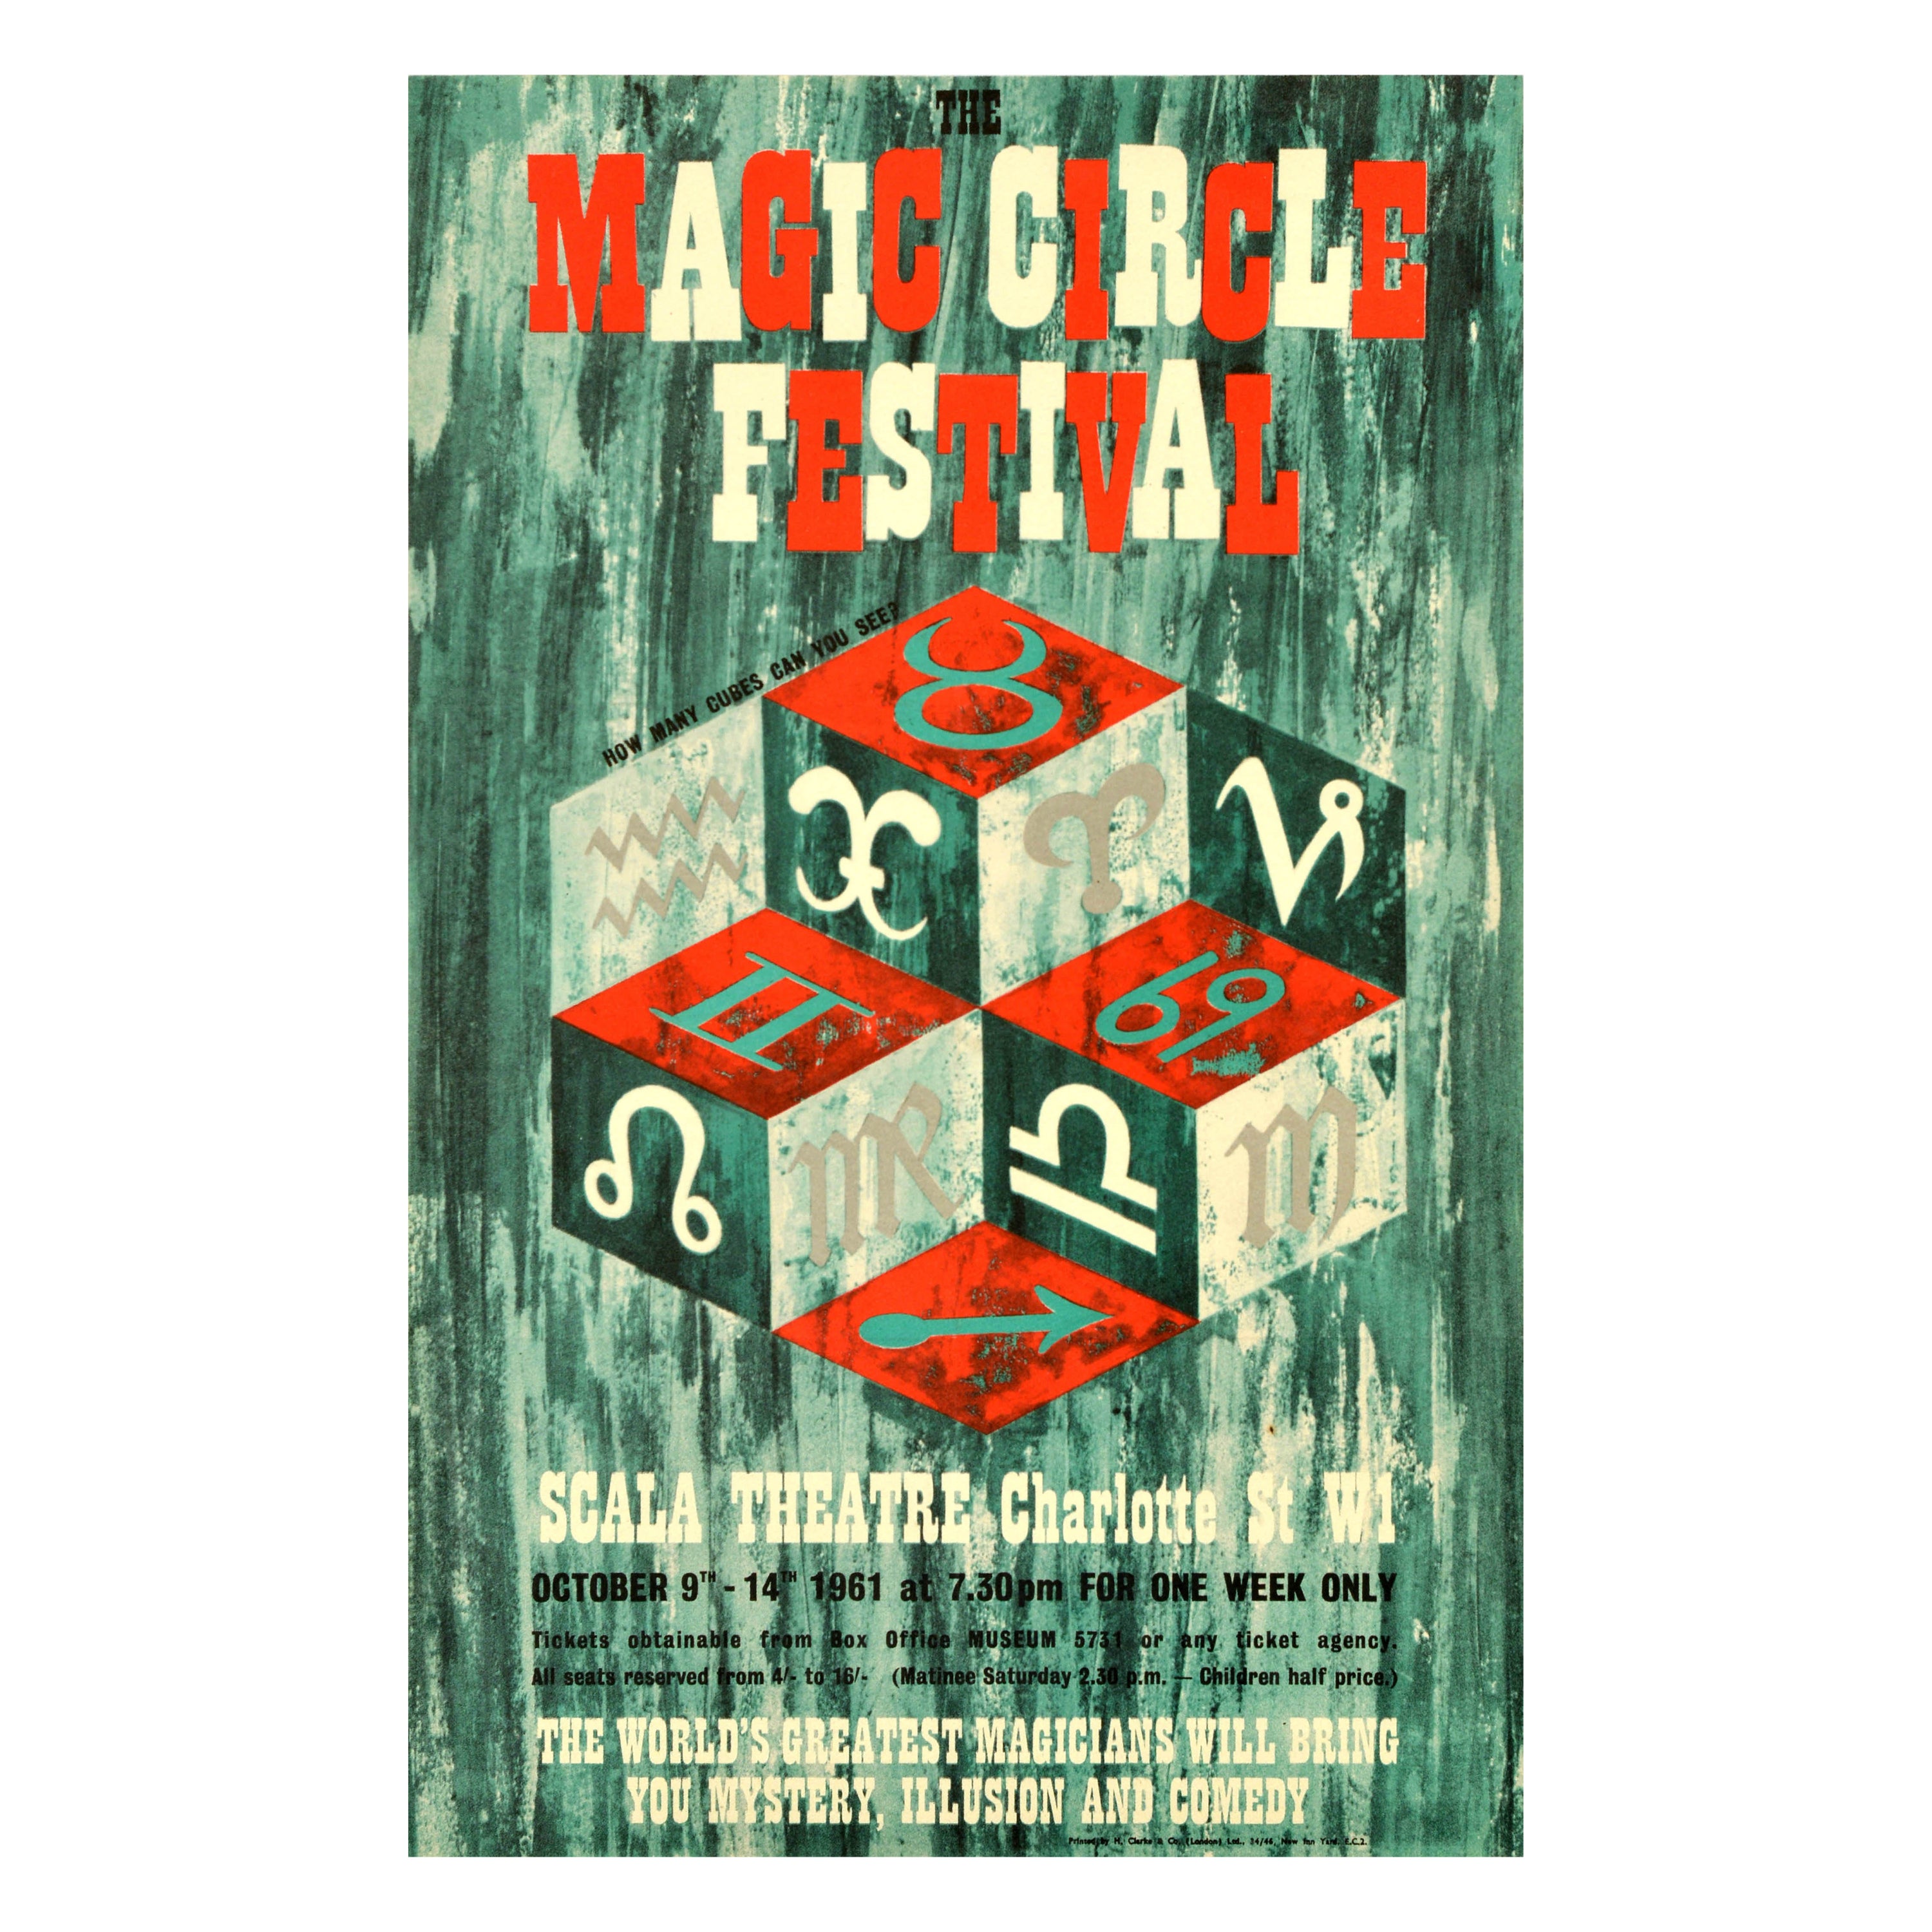 Affiche publicitaire originale du Magic Circle Festival Scala Theatre Mystery